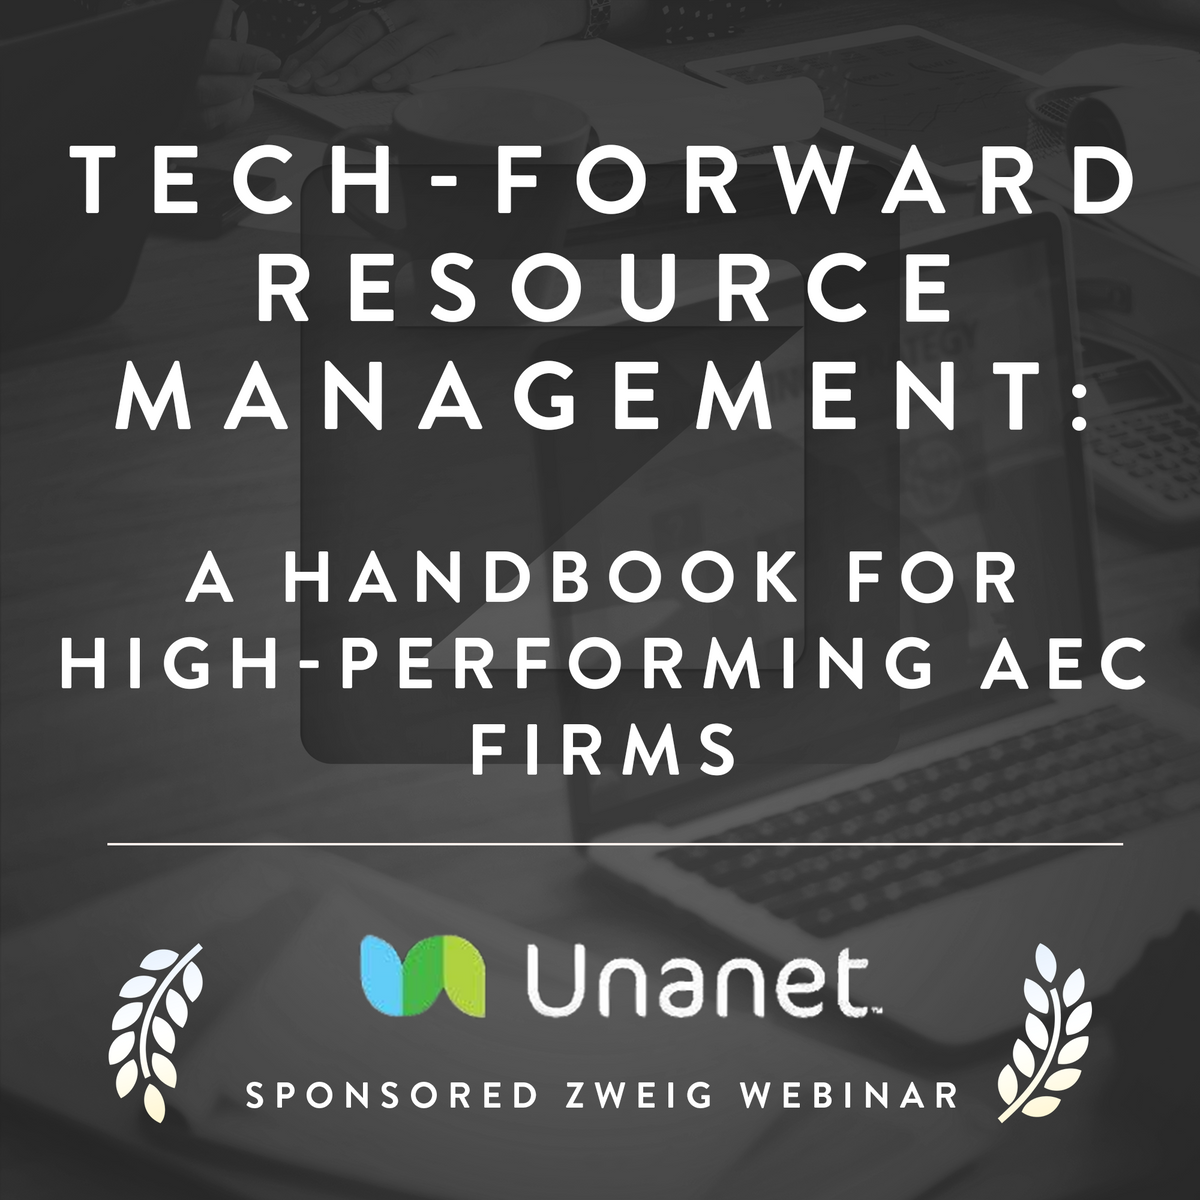 Tech Forward Resource Management: A Handbook For High-Performing AEC Firms - Unanet Sponsored Webinar Cover